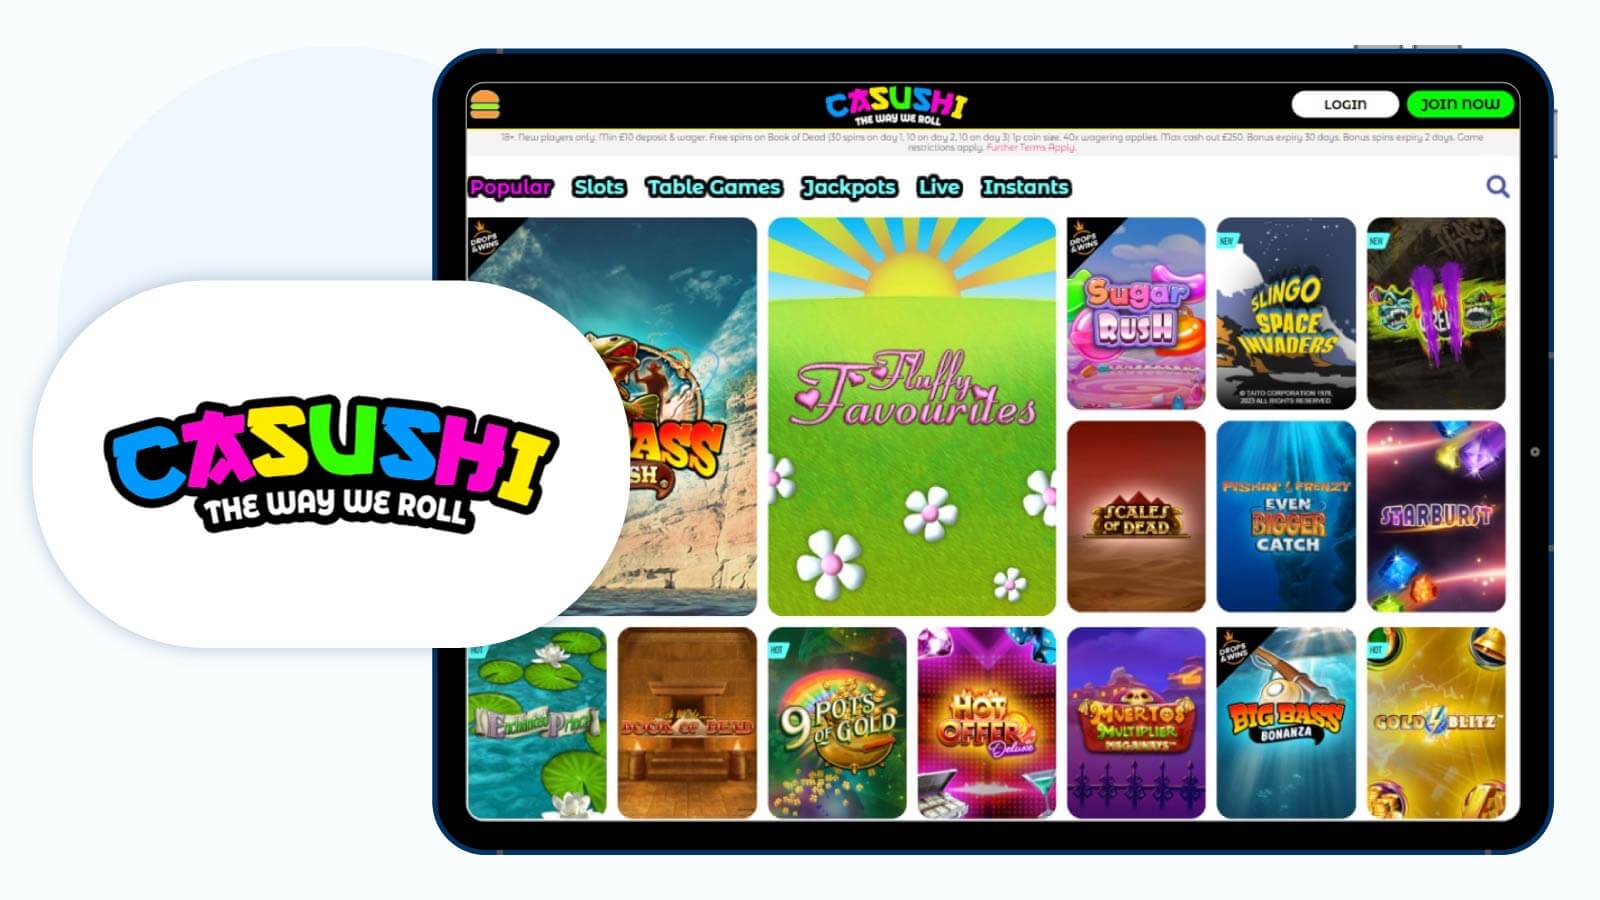 Casushi Casino Best MasterCard Casino for Live Dealer Games